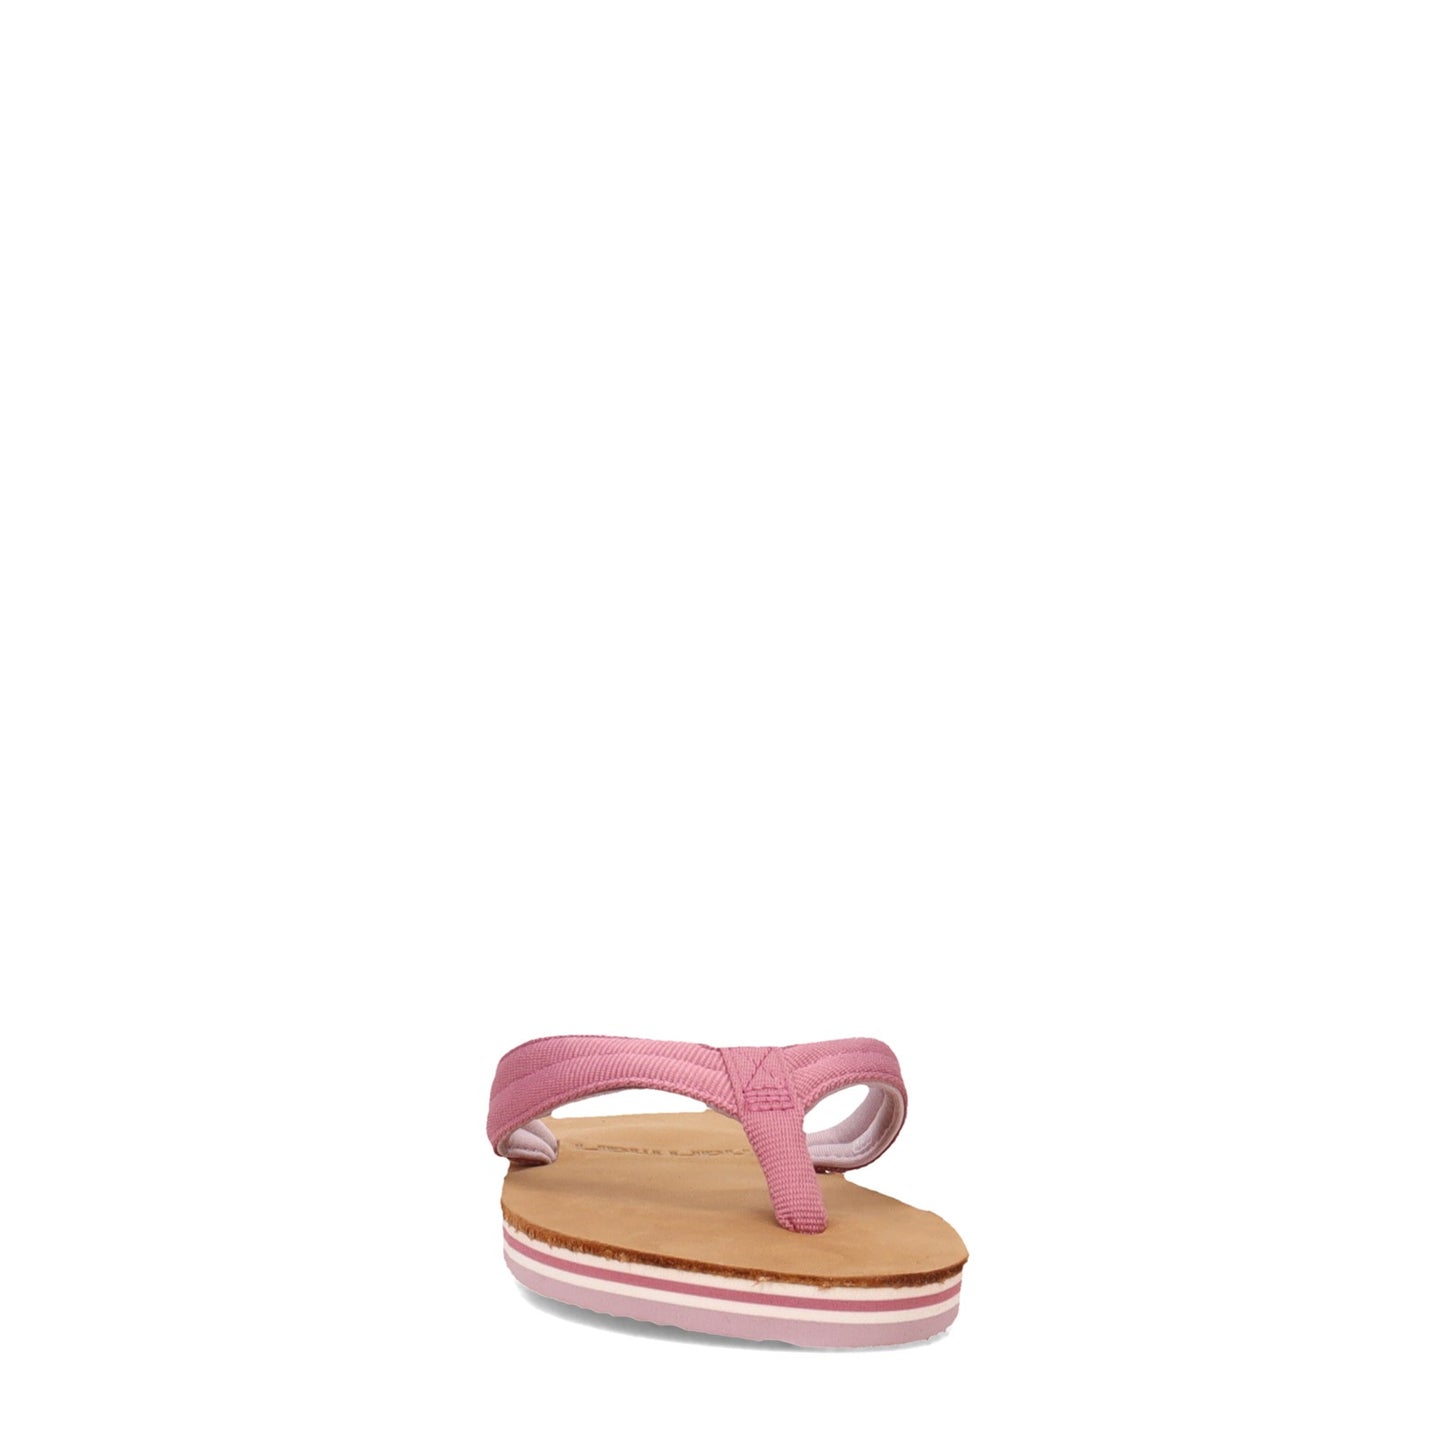 Peltz Shoes  Girl's Hari Mari Scouts Sandal - Little Kid & Big Kid ROSE 4003-410 K